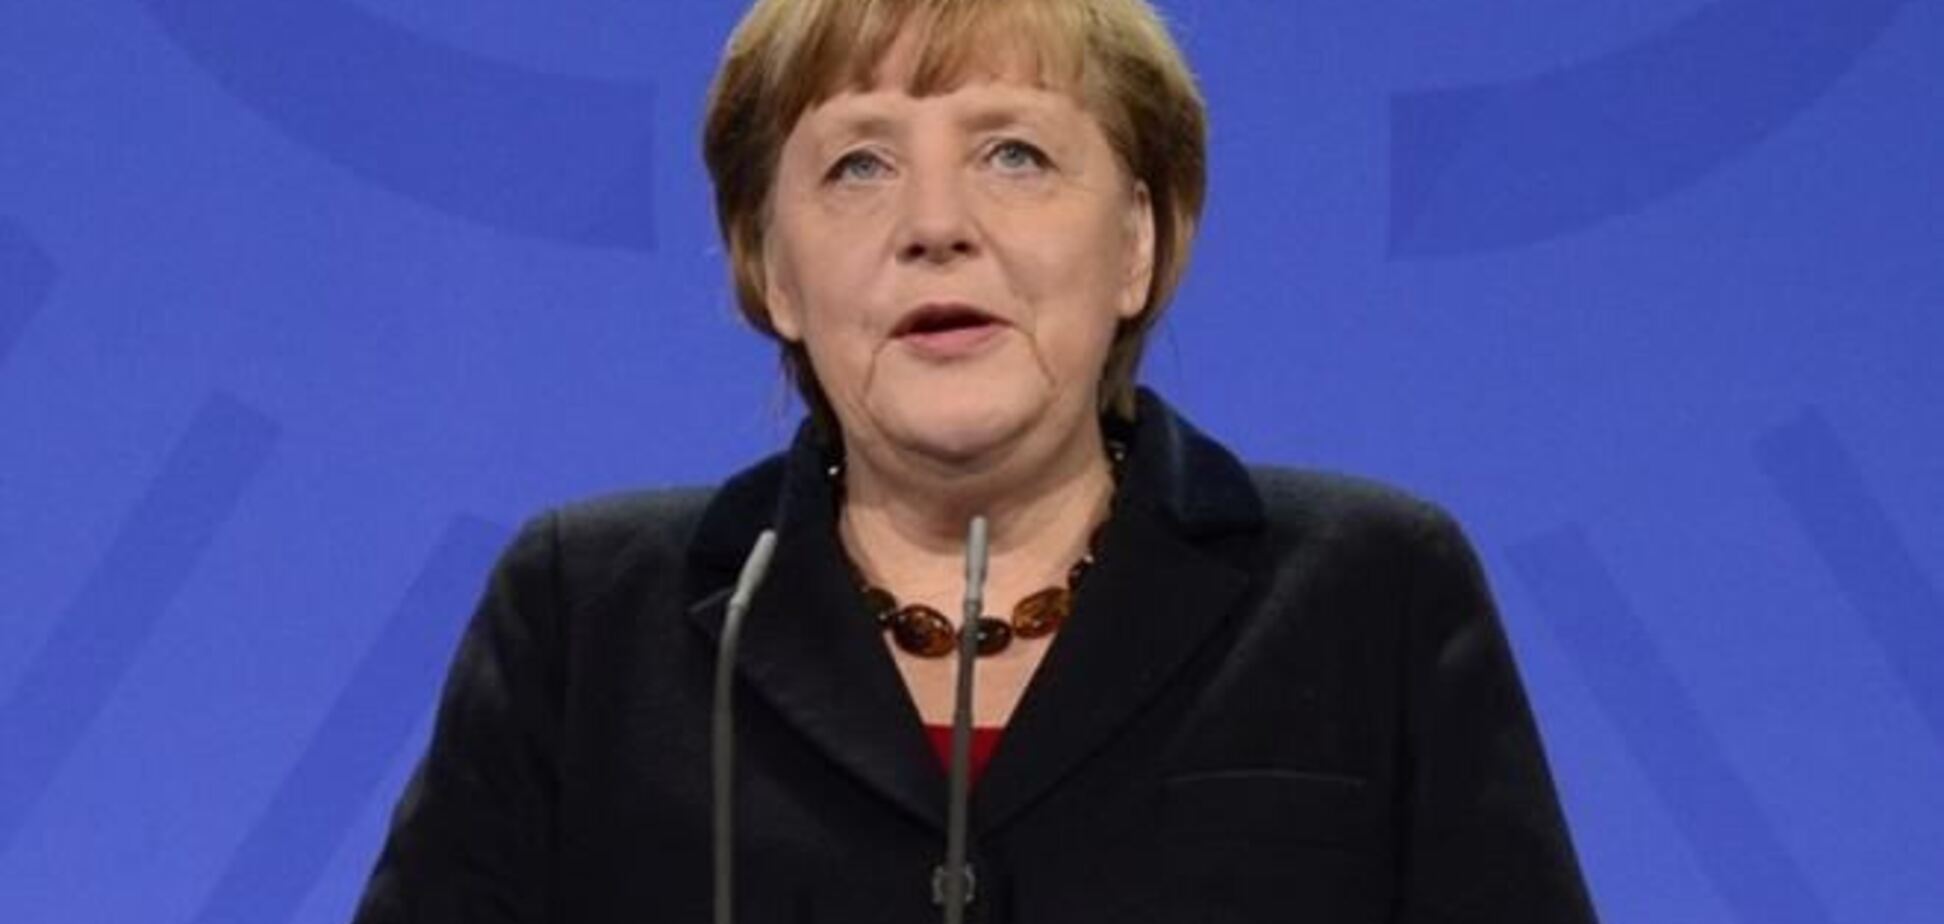 Травма Меркель лечится без последствий - врачи